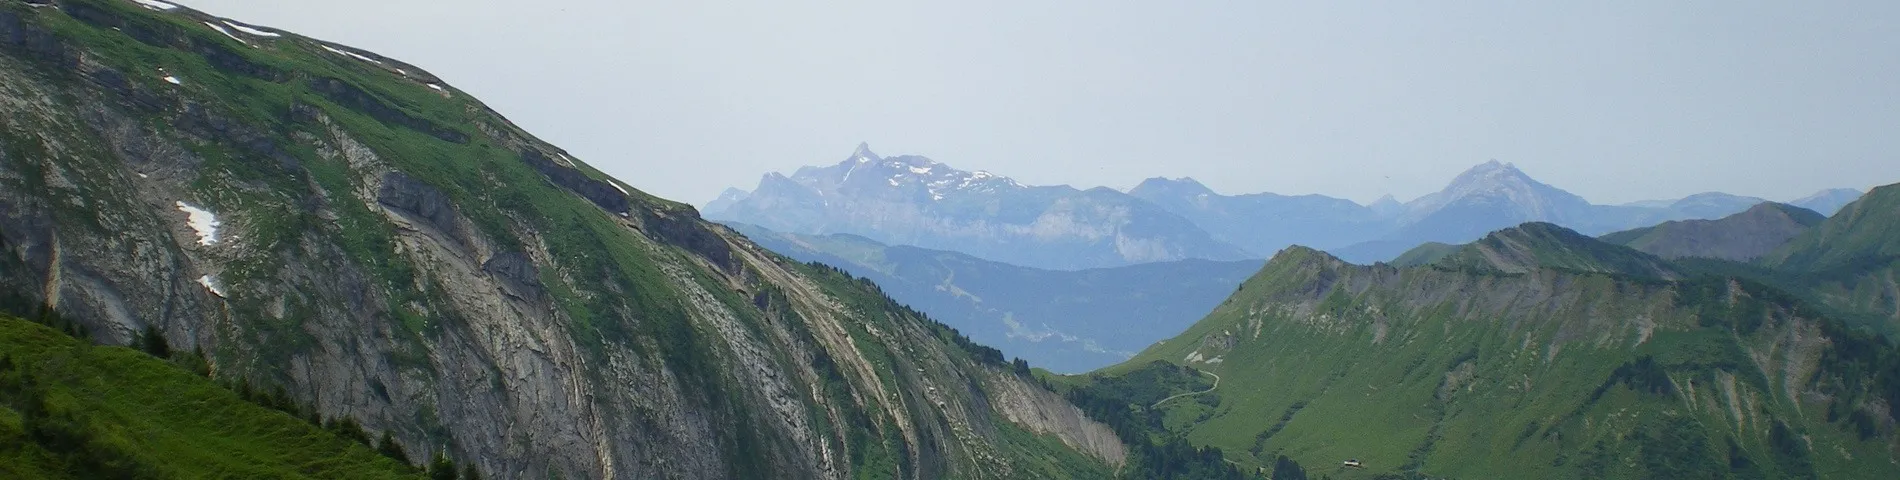 Morzine (Alpes) - General